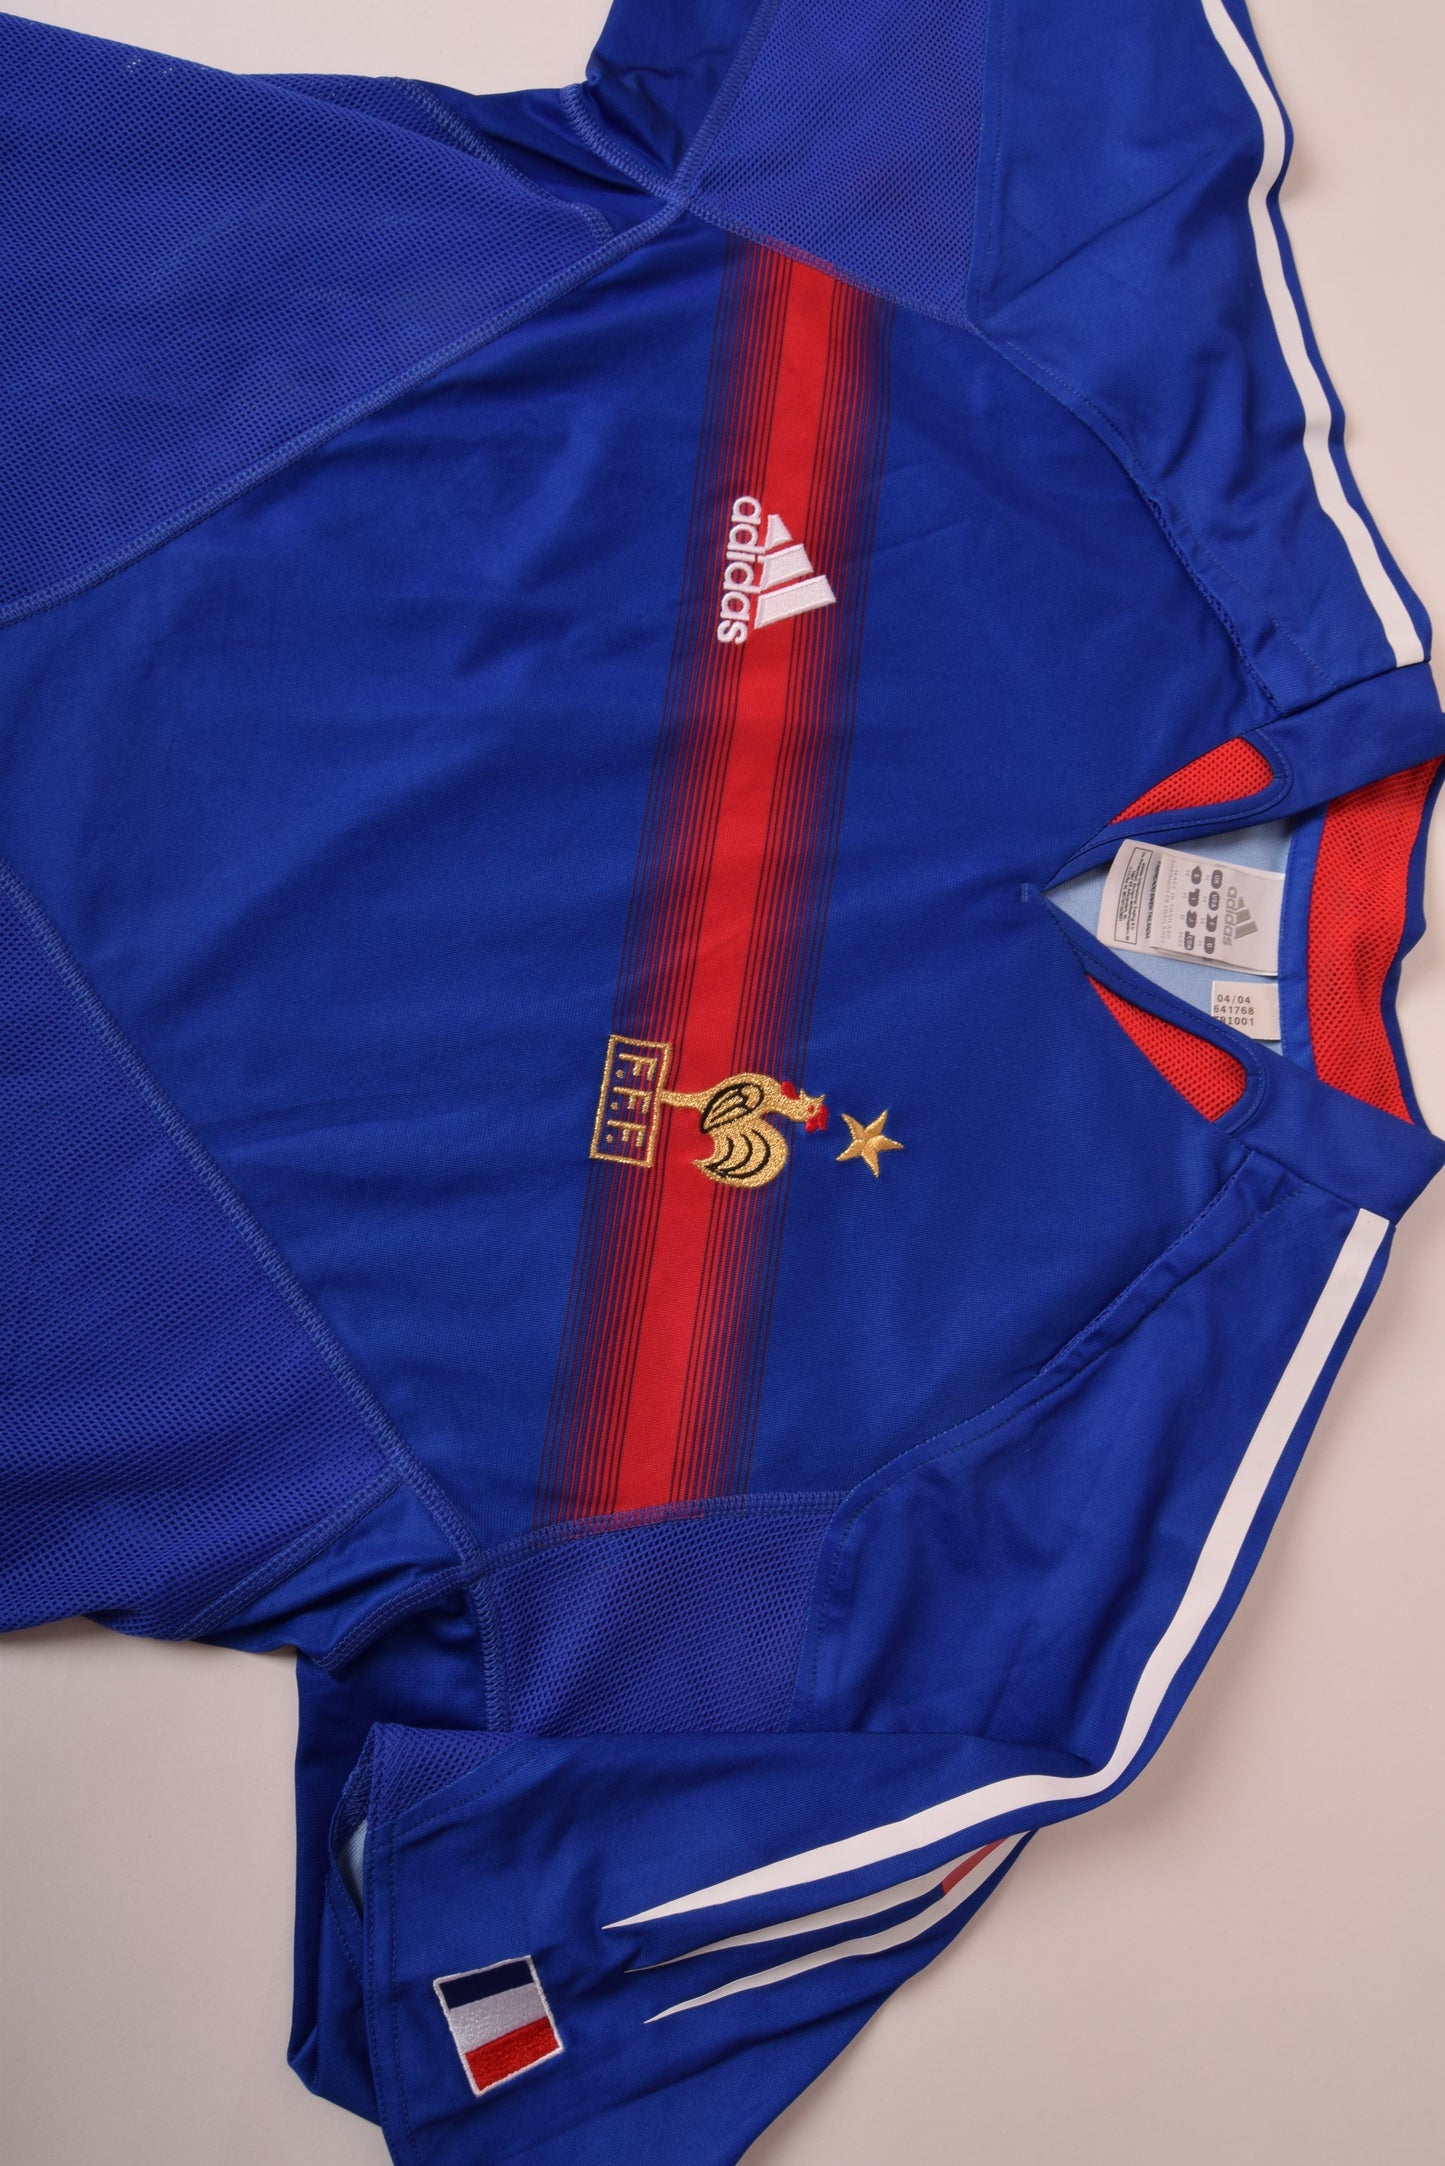 France Adidas 2004-2005 Home Football Shirt Blue Size M